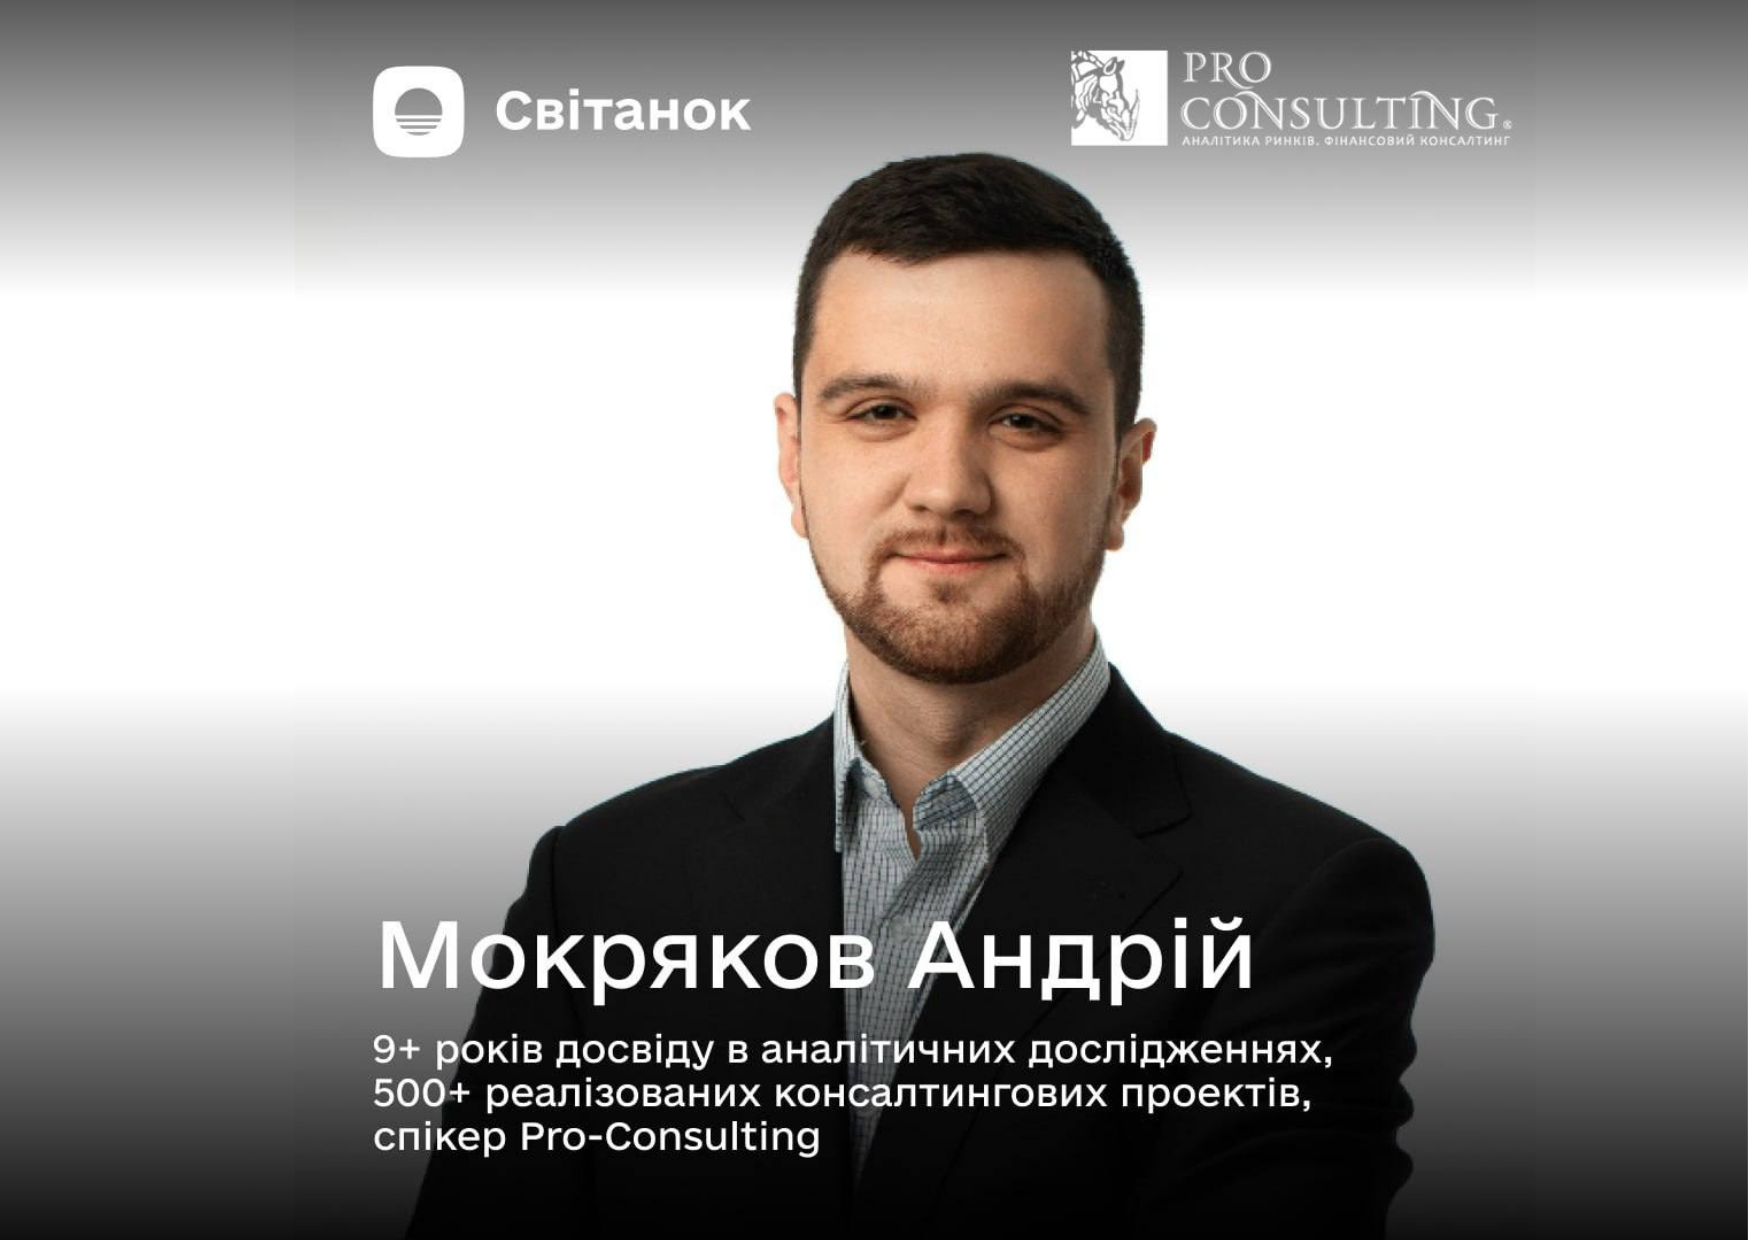 Grant program “Svitanok” by Diia.Bucha project: Pro-Consulting provided consultations for entrepreneurs